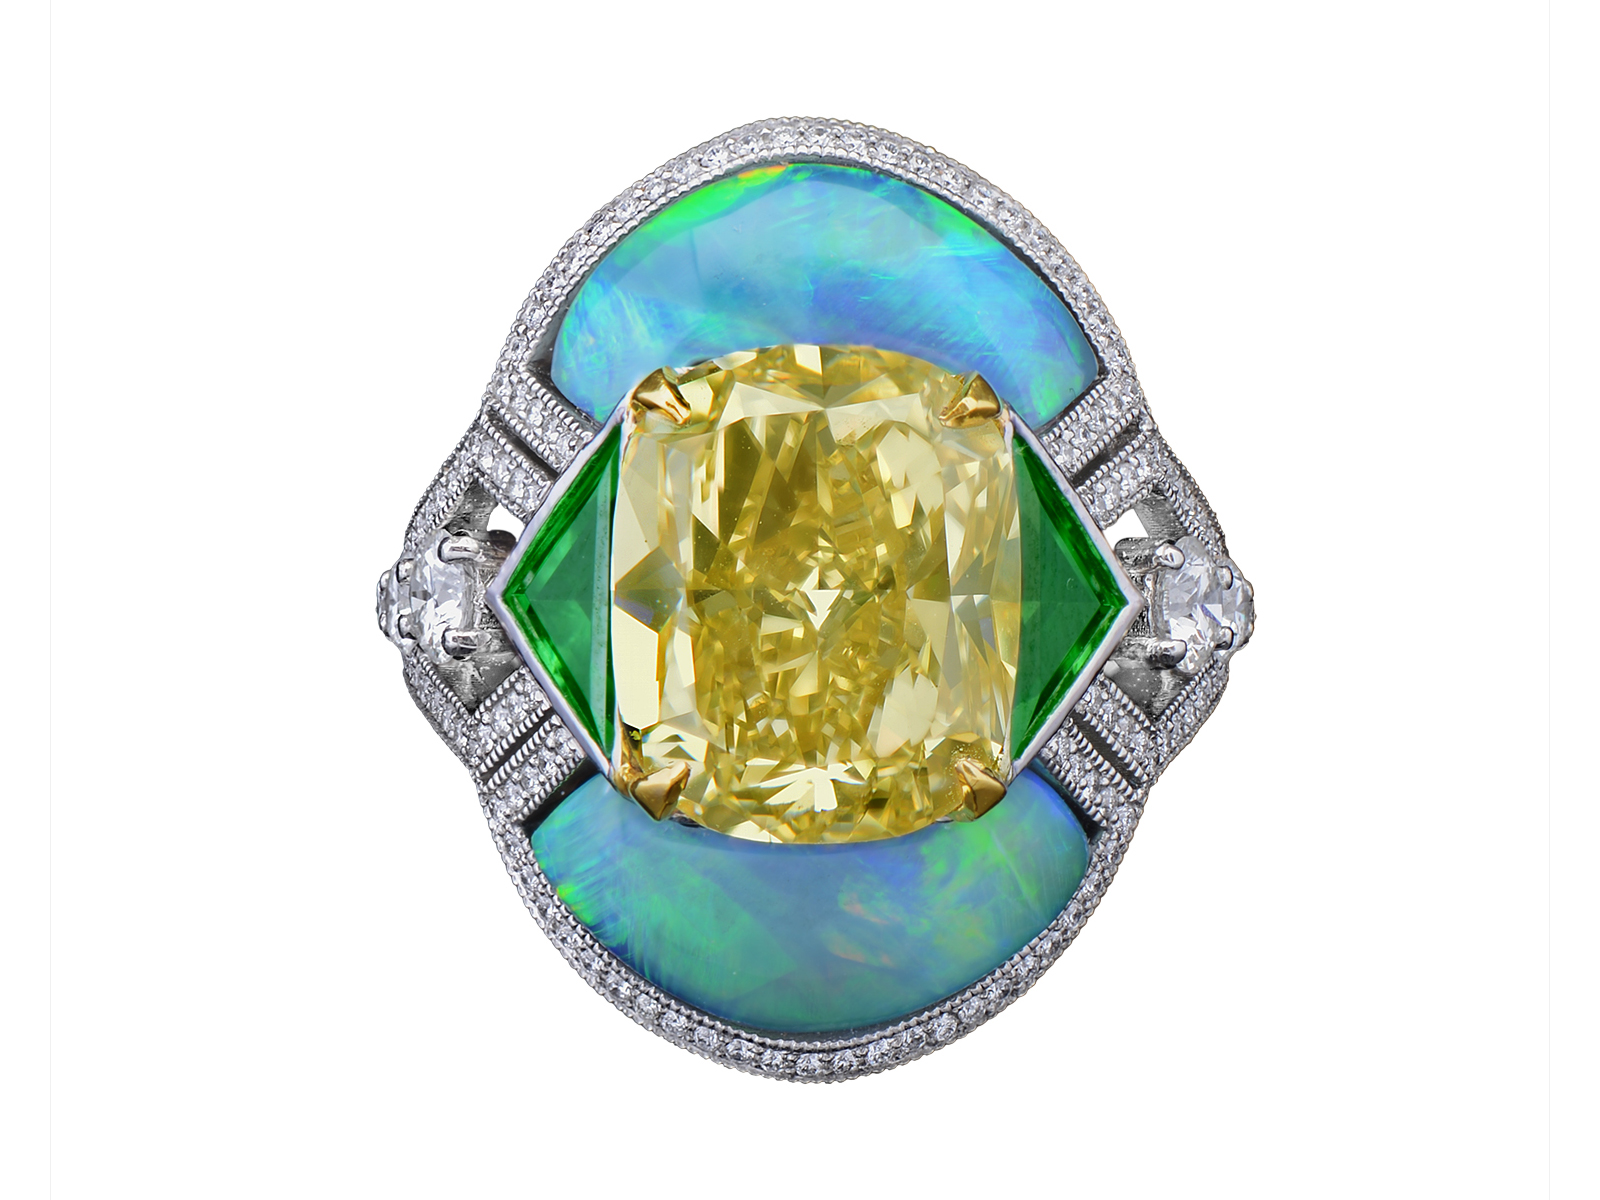 Morelle Davidson ring with a 6.65 cts cushion cut yellow diamond, opals and deep apple green triangular-cut tsavorite garnets